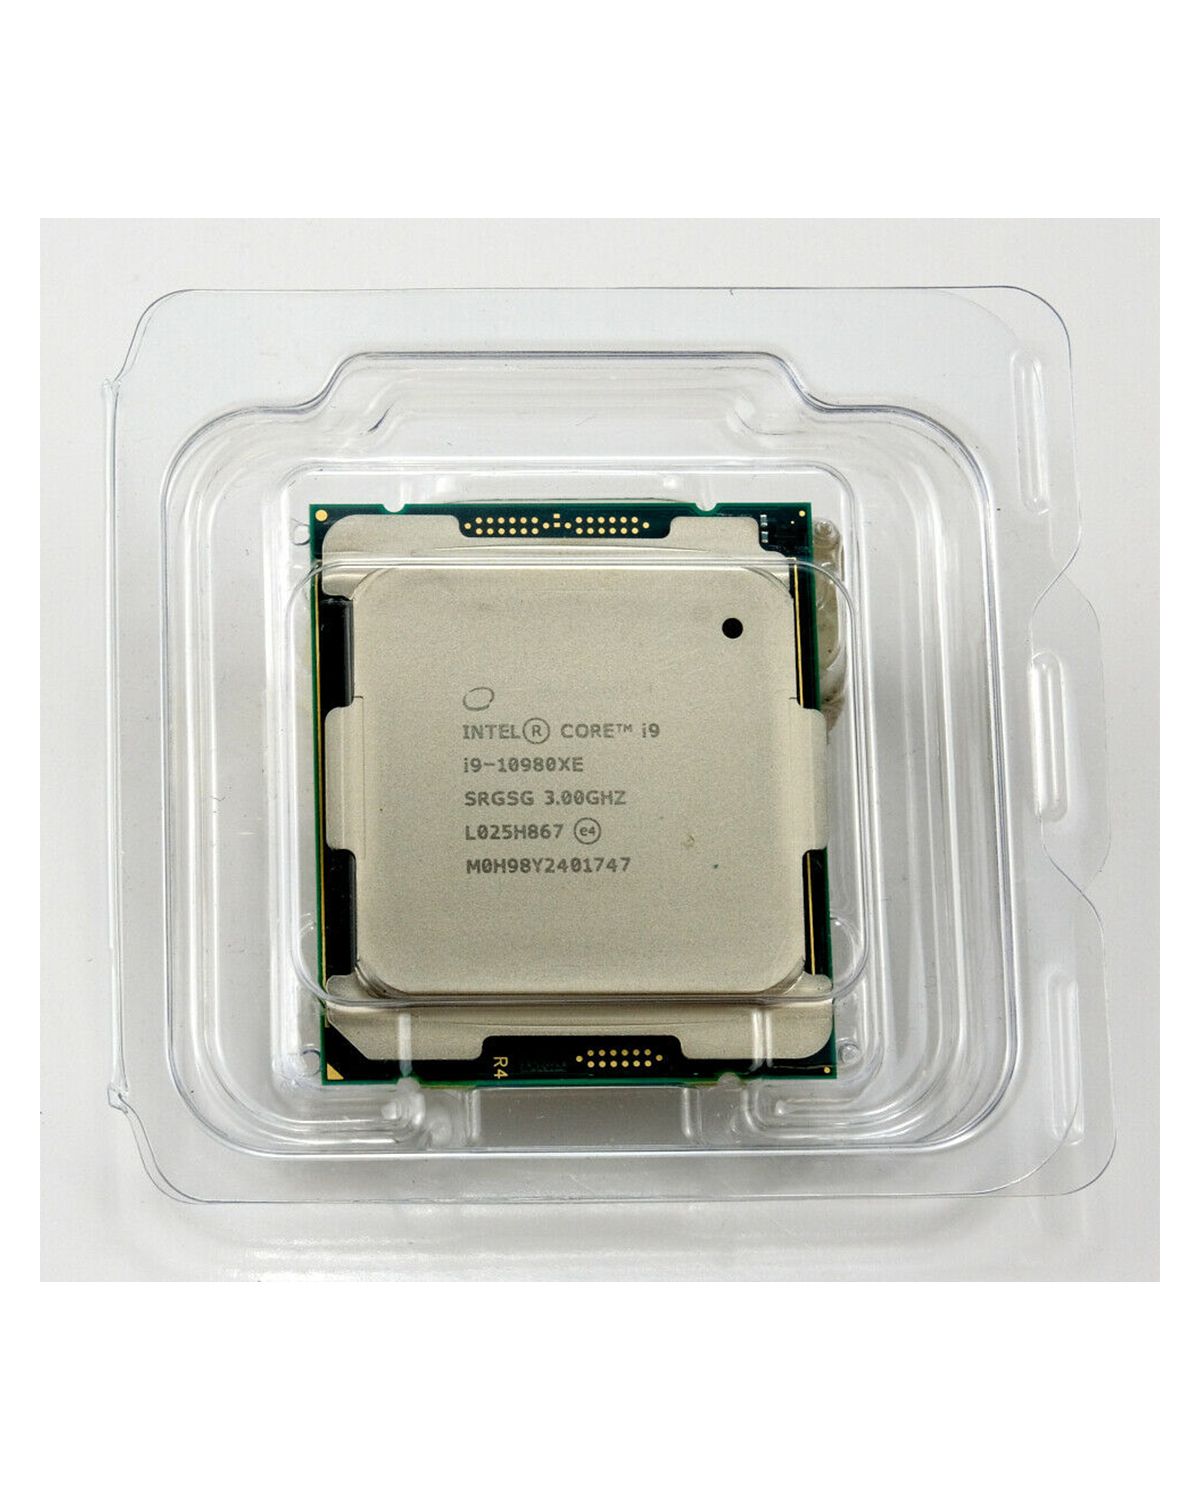 INTEL CORE i9-10980XE SRGSG 3.00GHZ CPU PROCESSOR